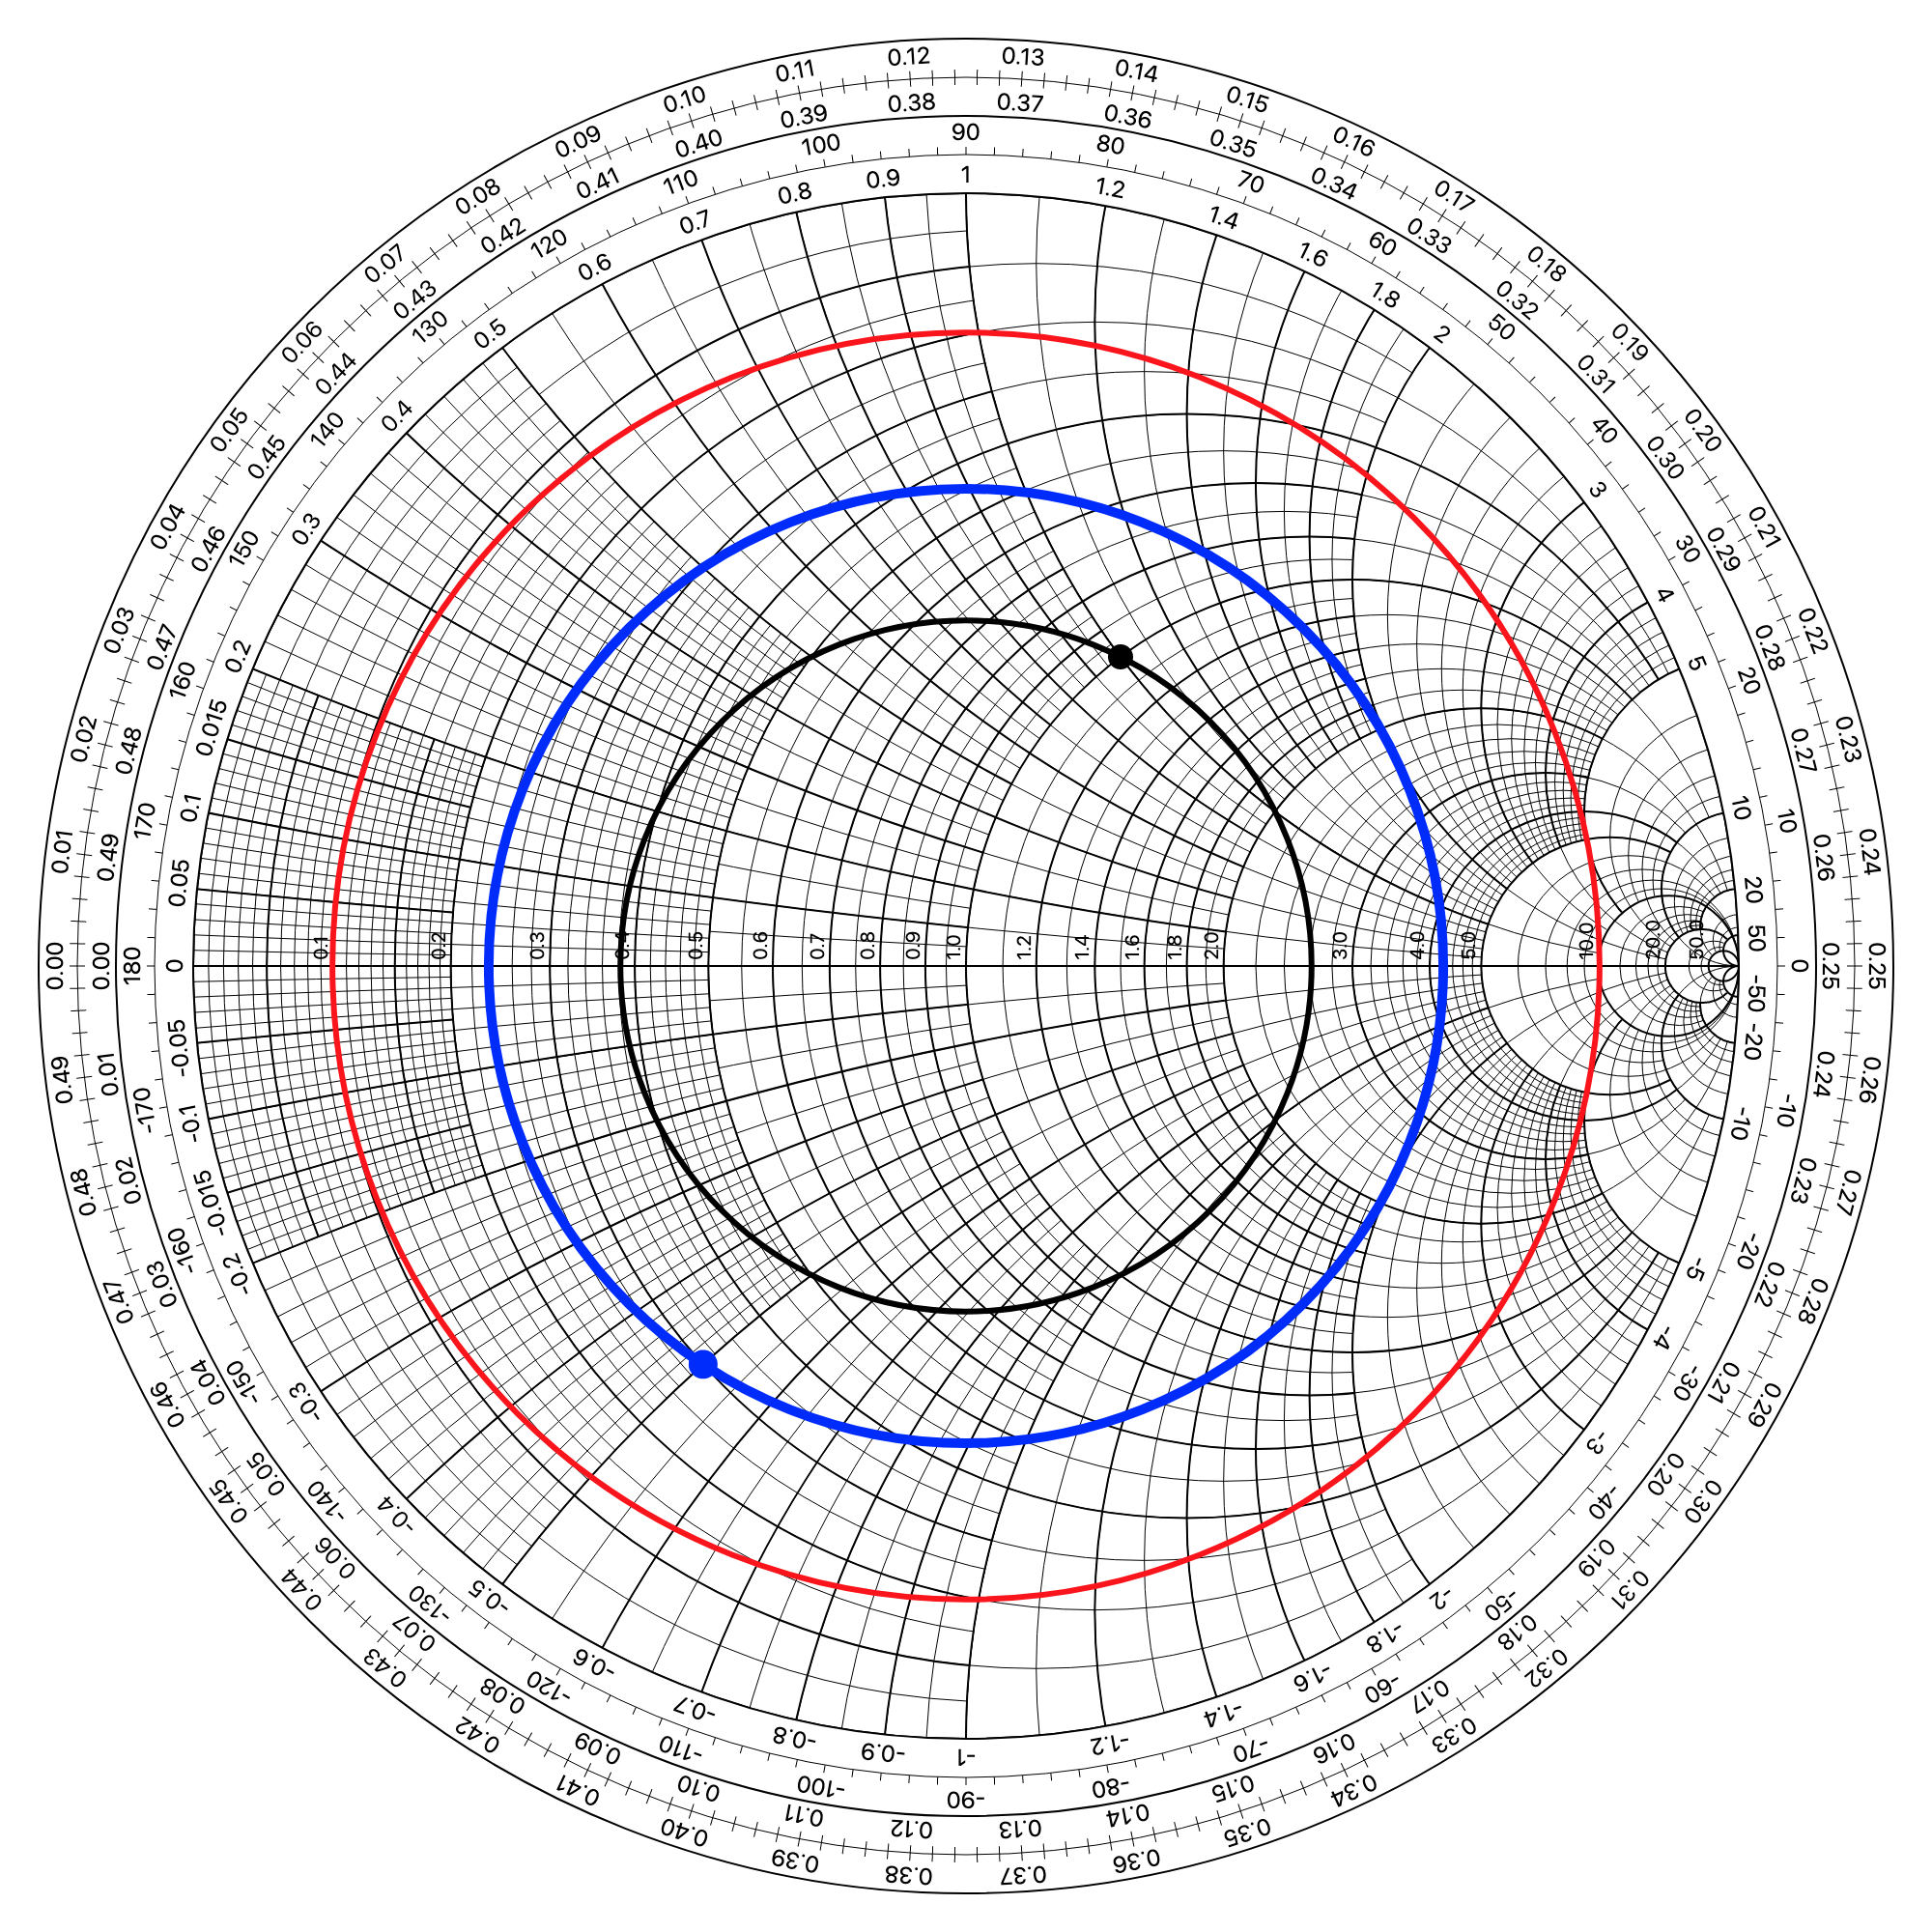 Smith Chart with custom VSWR circles